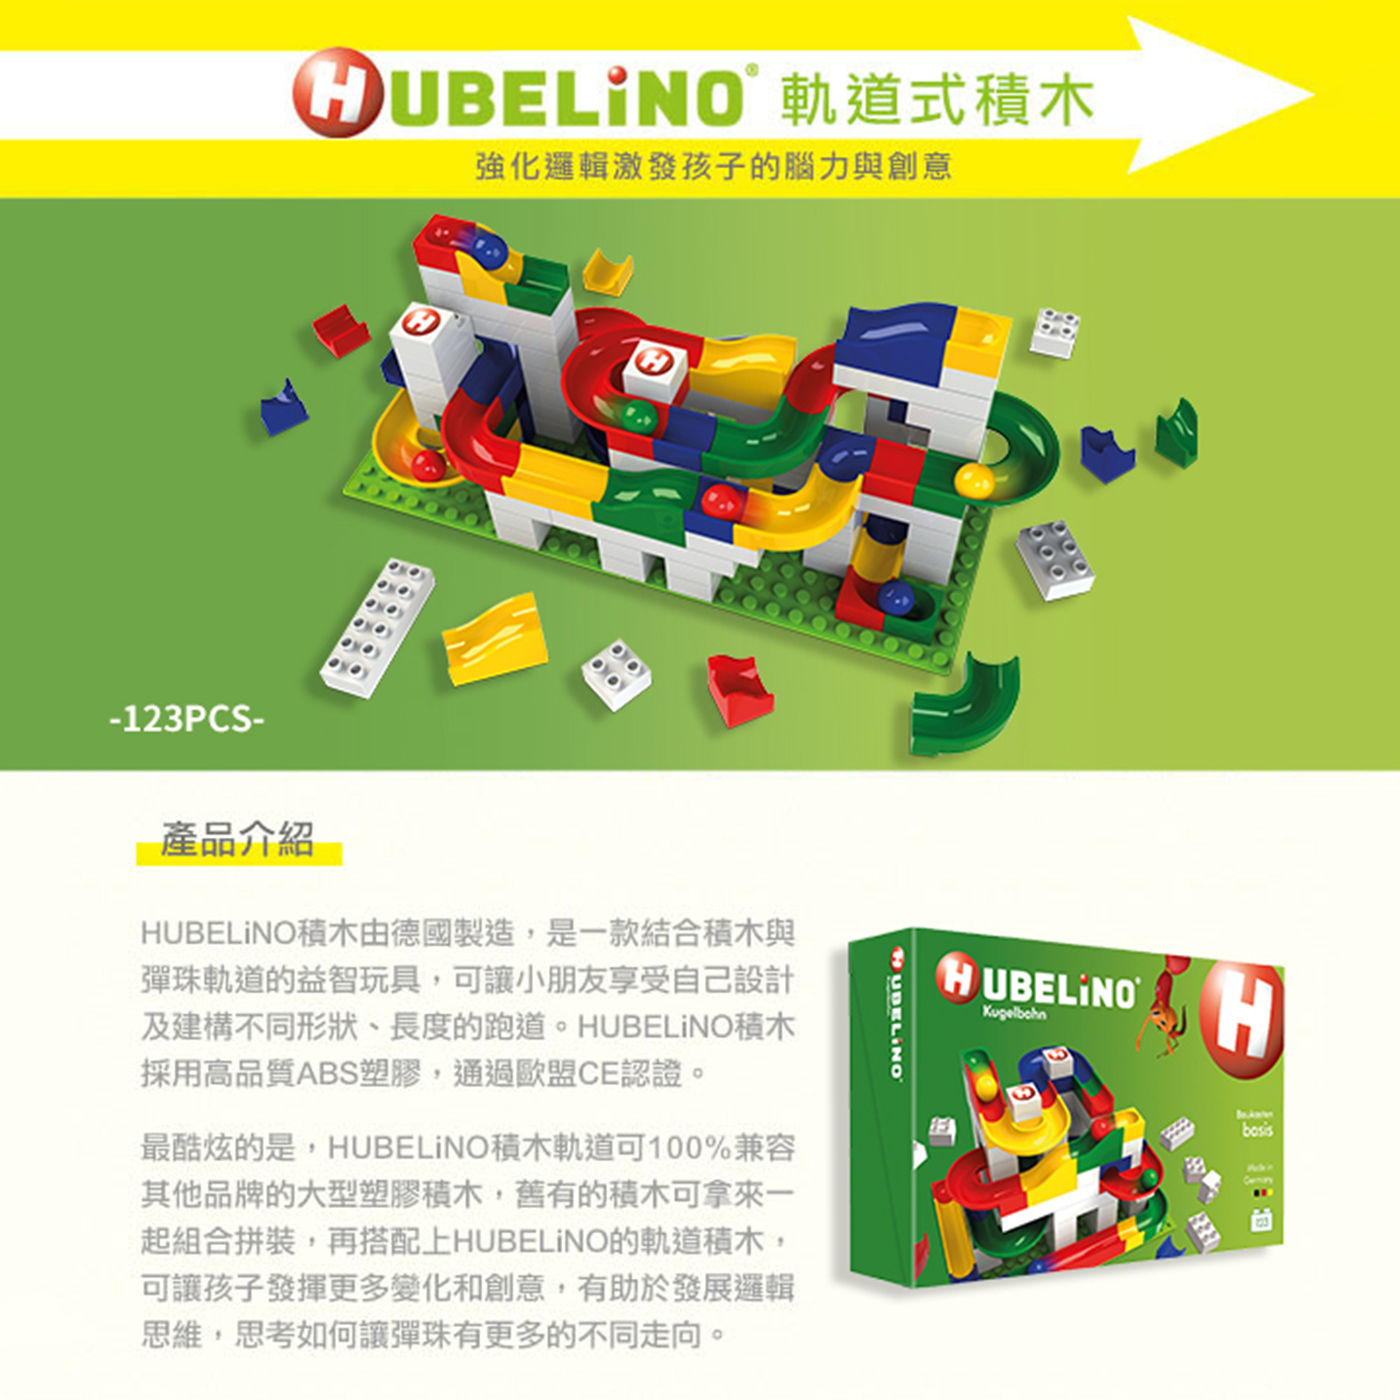 HUBELiNO 軌道滾球積木 123入裝積木由德國製造是一款結合積木與彈珠軌道的益智玩具可讓小朋友自己設計及建構不同形狀長度的軌道